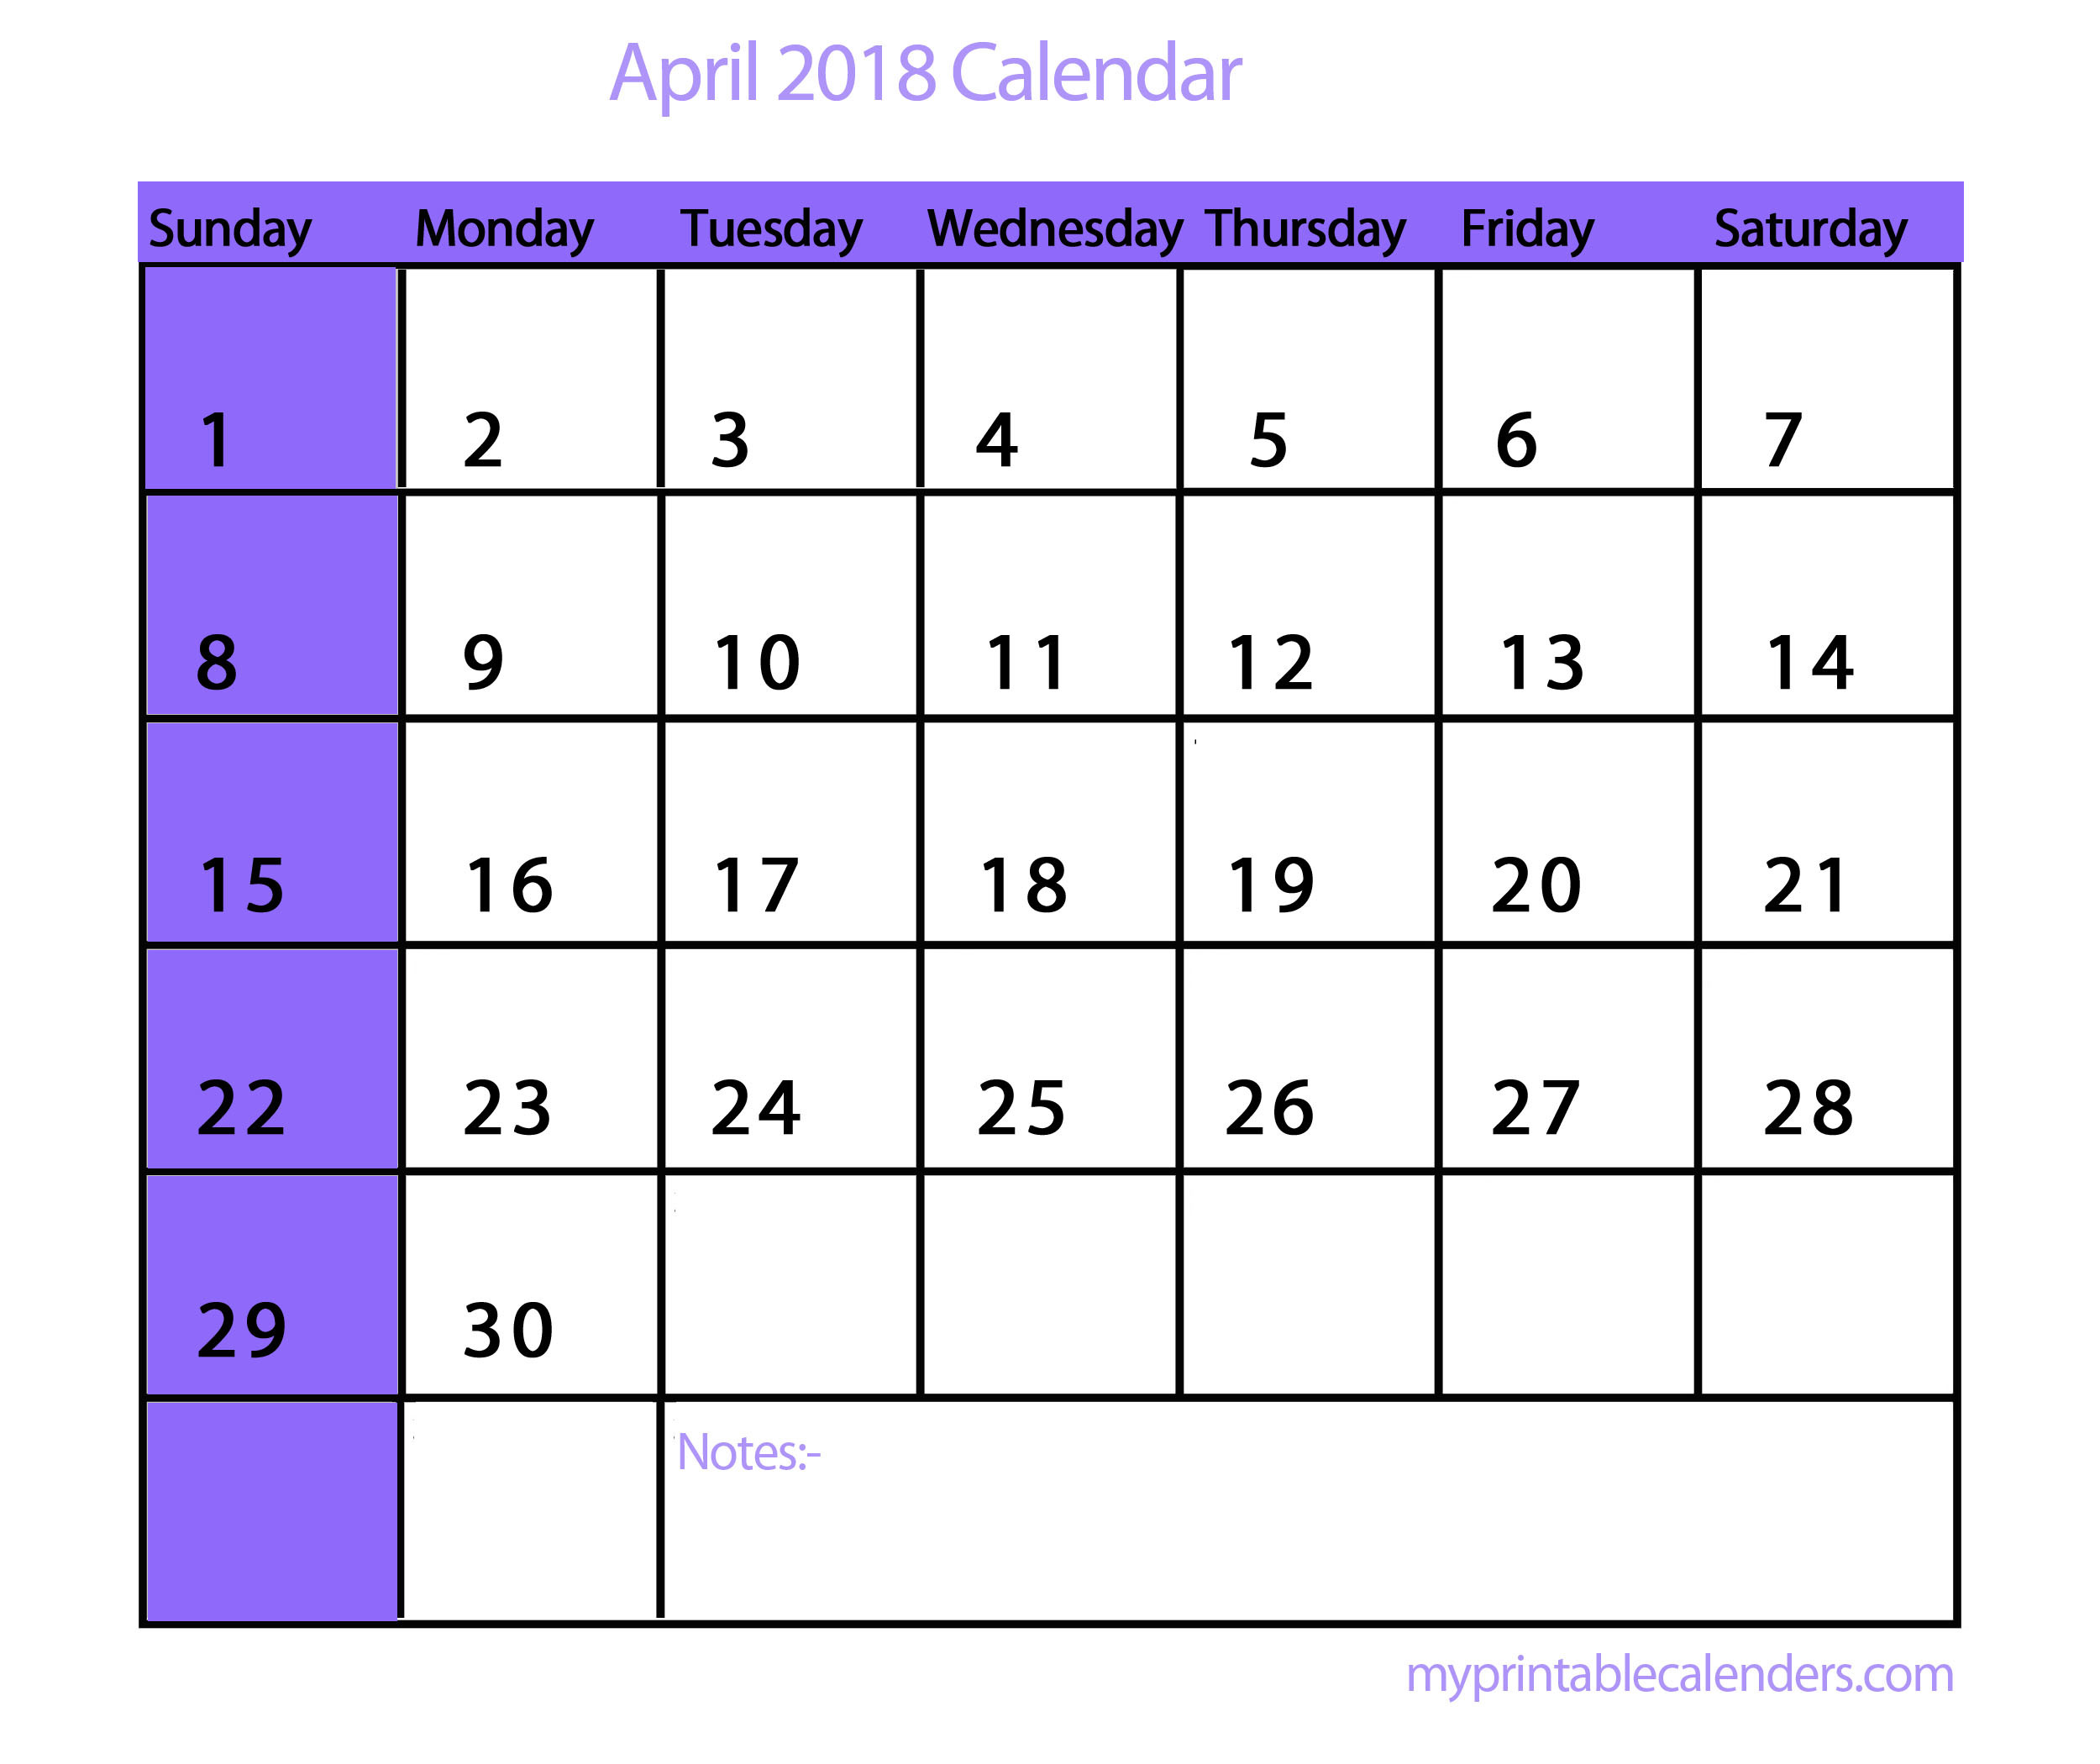 April 2018 calendar